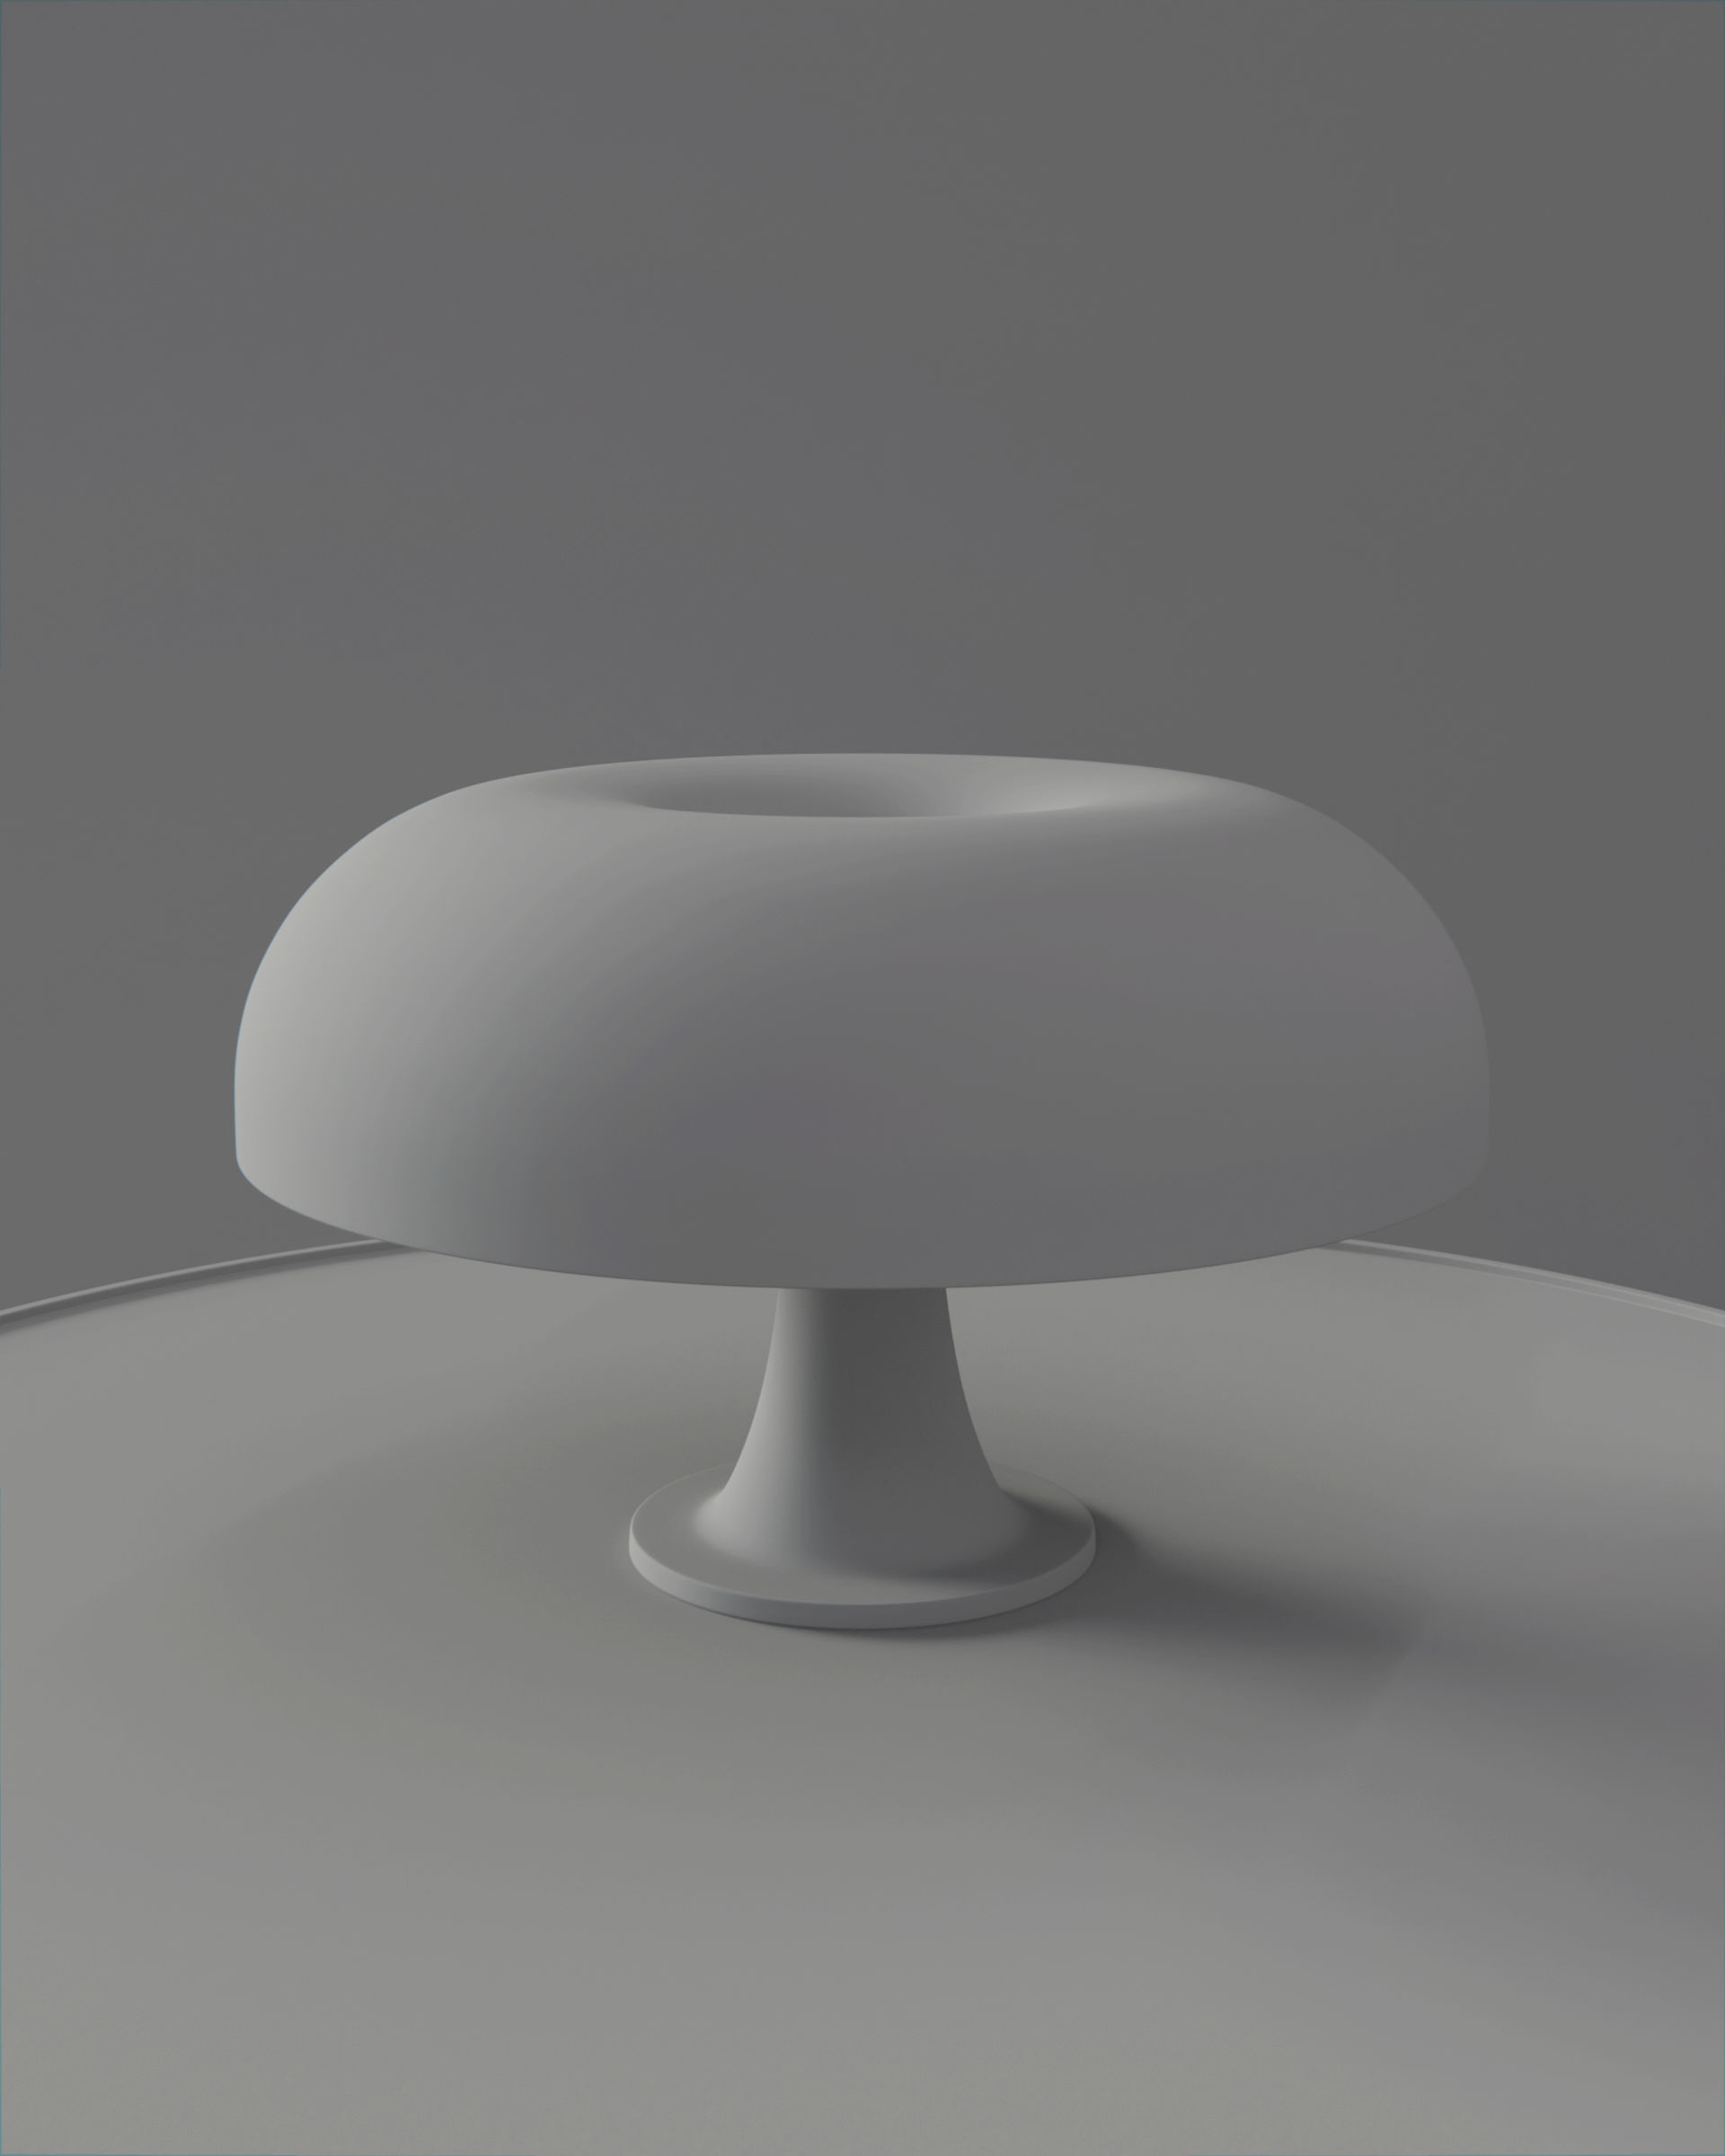 15 NessoLamp Clay V2 - Nesso table lamp CGI - Sonny Nguyen